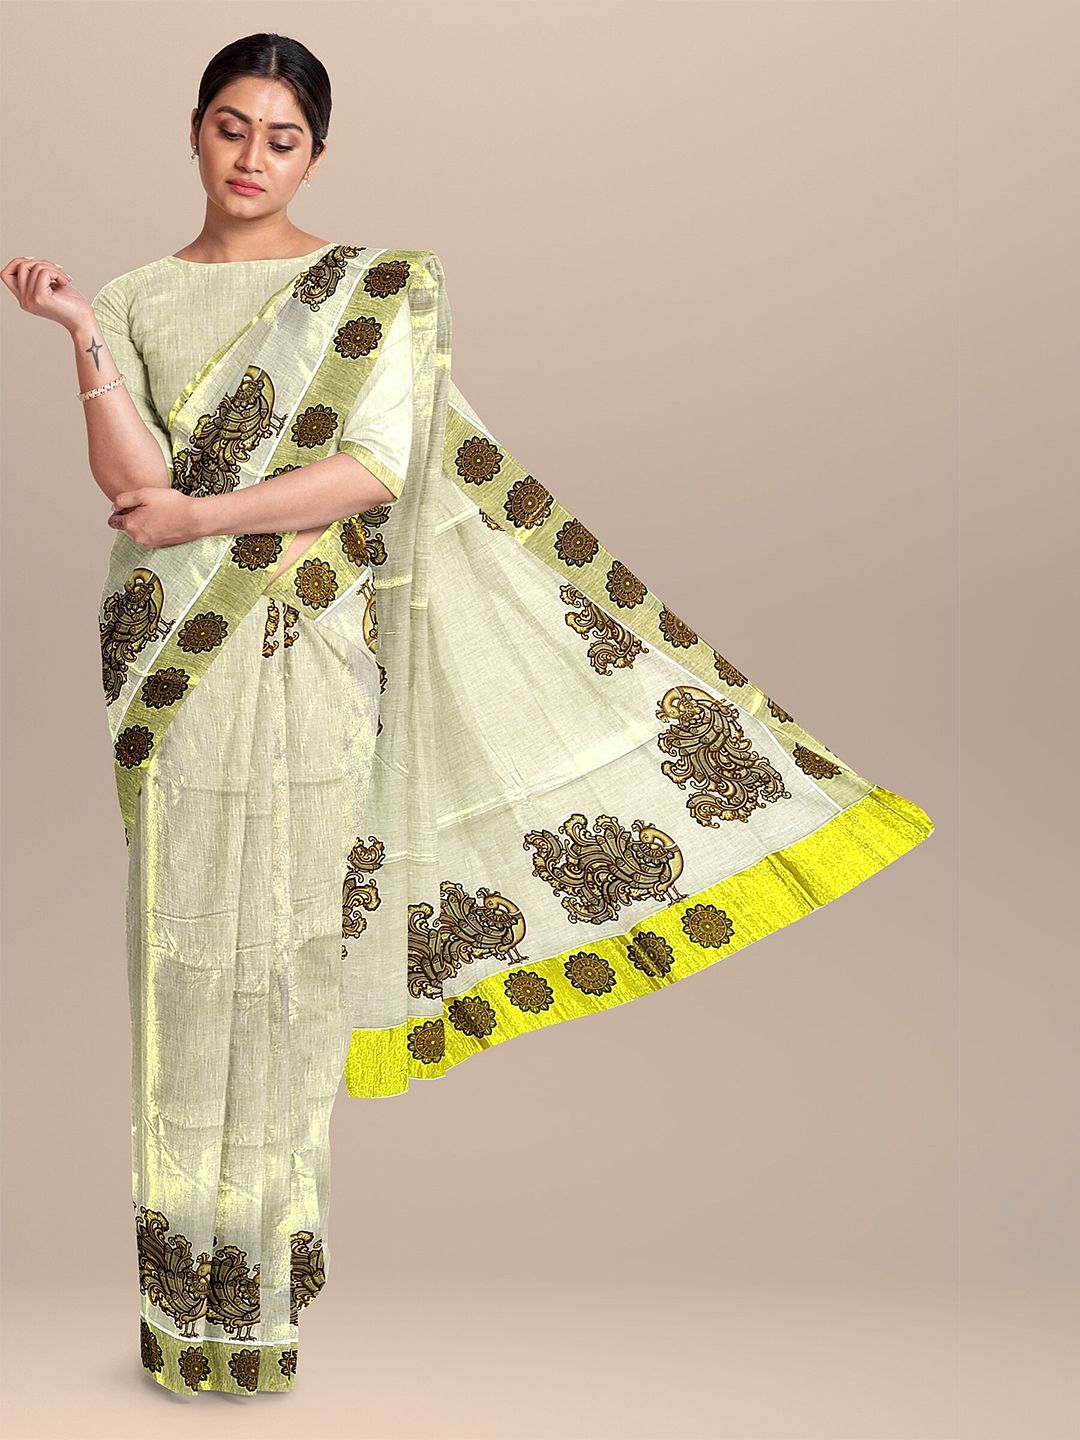 The Chennai Silks Off White & Gold-Toned Ethnic Motifs Zari Pure Cotton Fusion Kasavu Saree Price in India